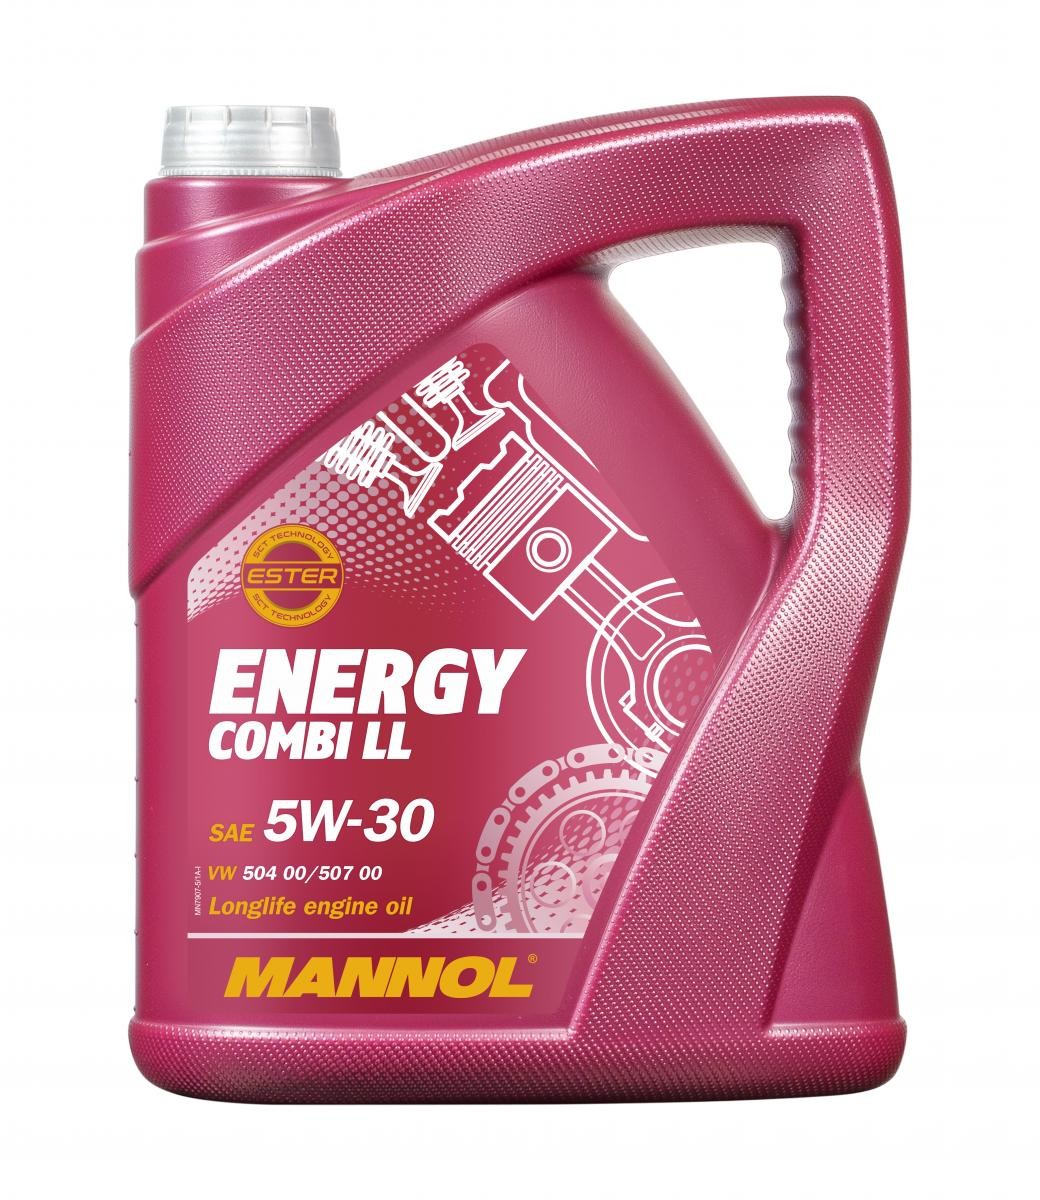 MANNOL ENERGY COMBI LL MN7907-5 Engine oil 5W-30, 5l